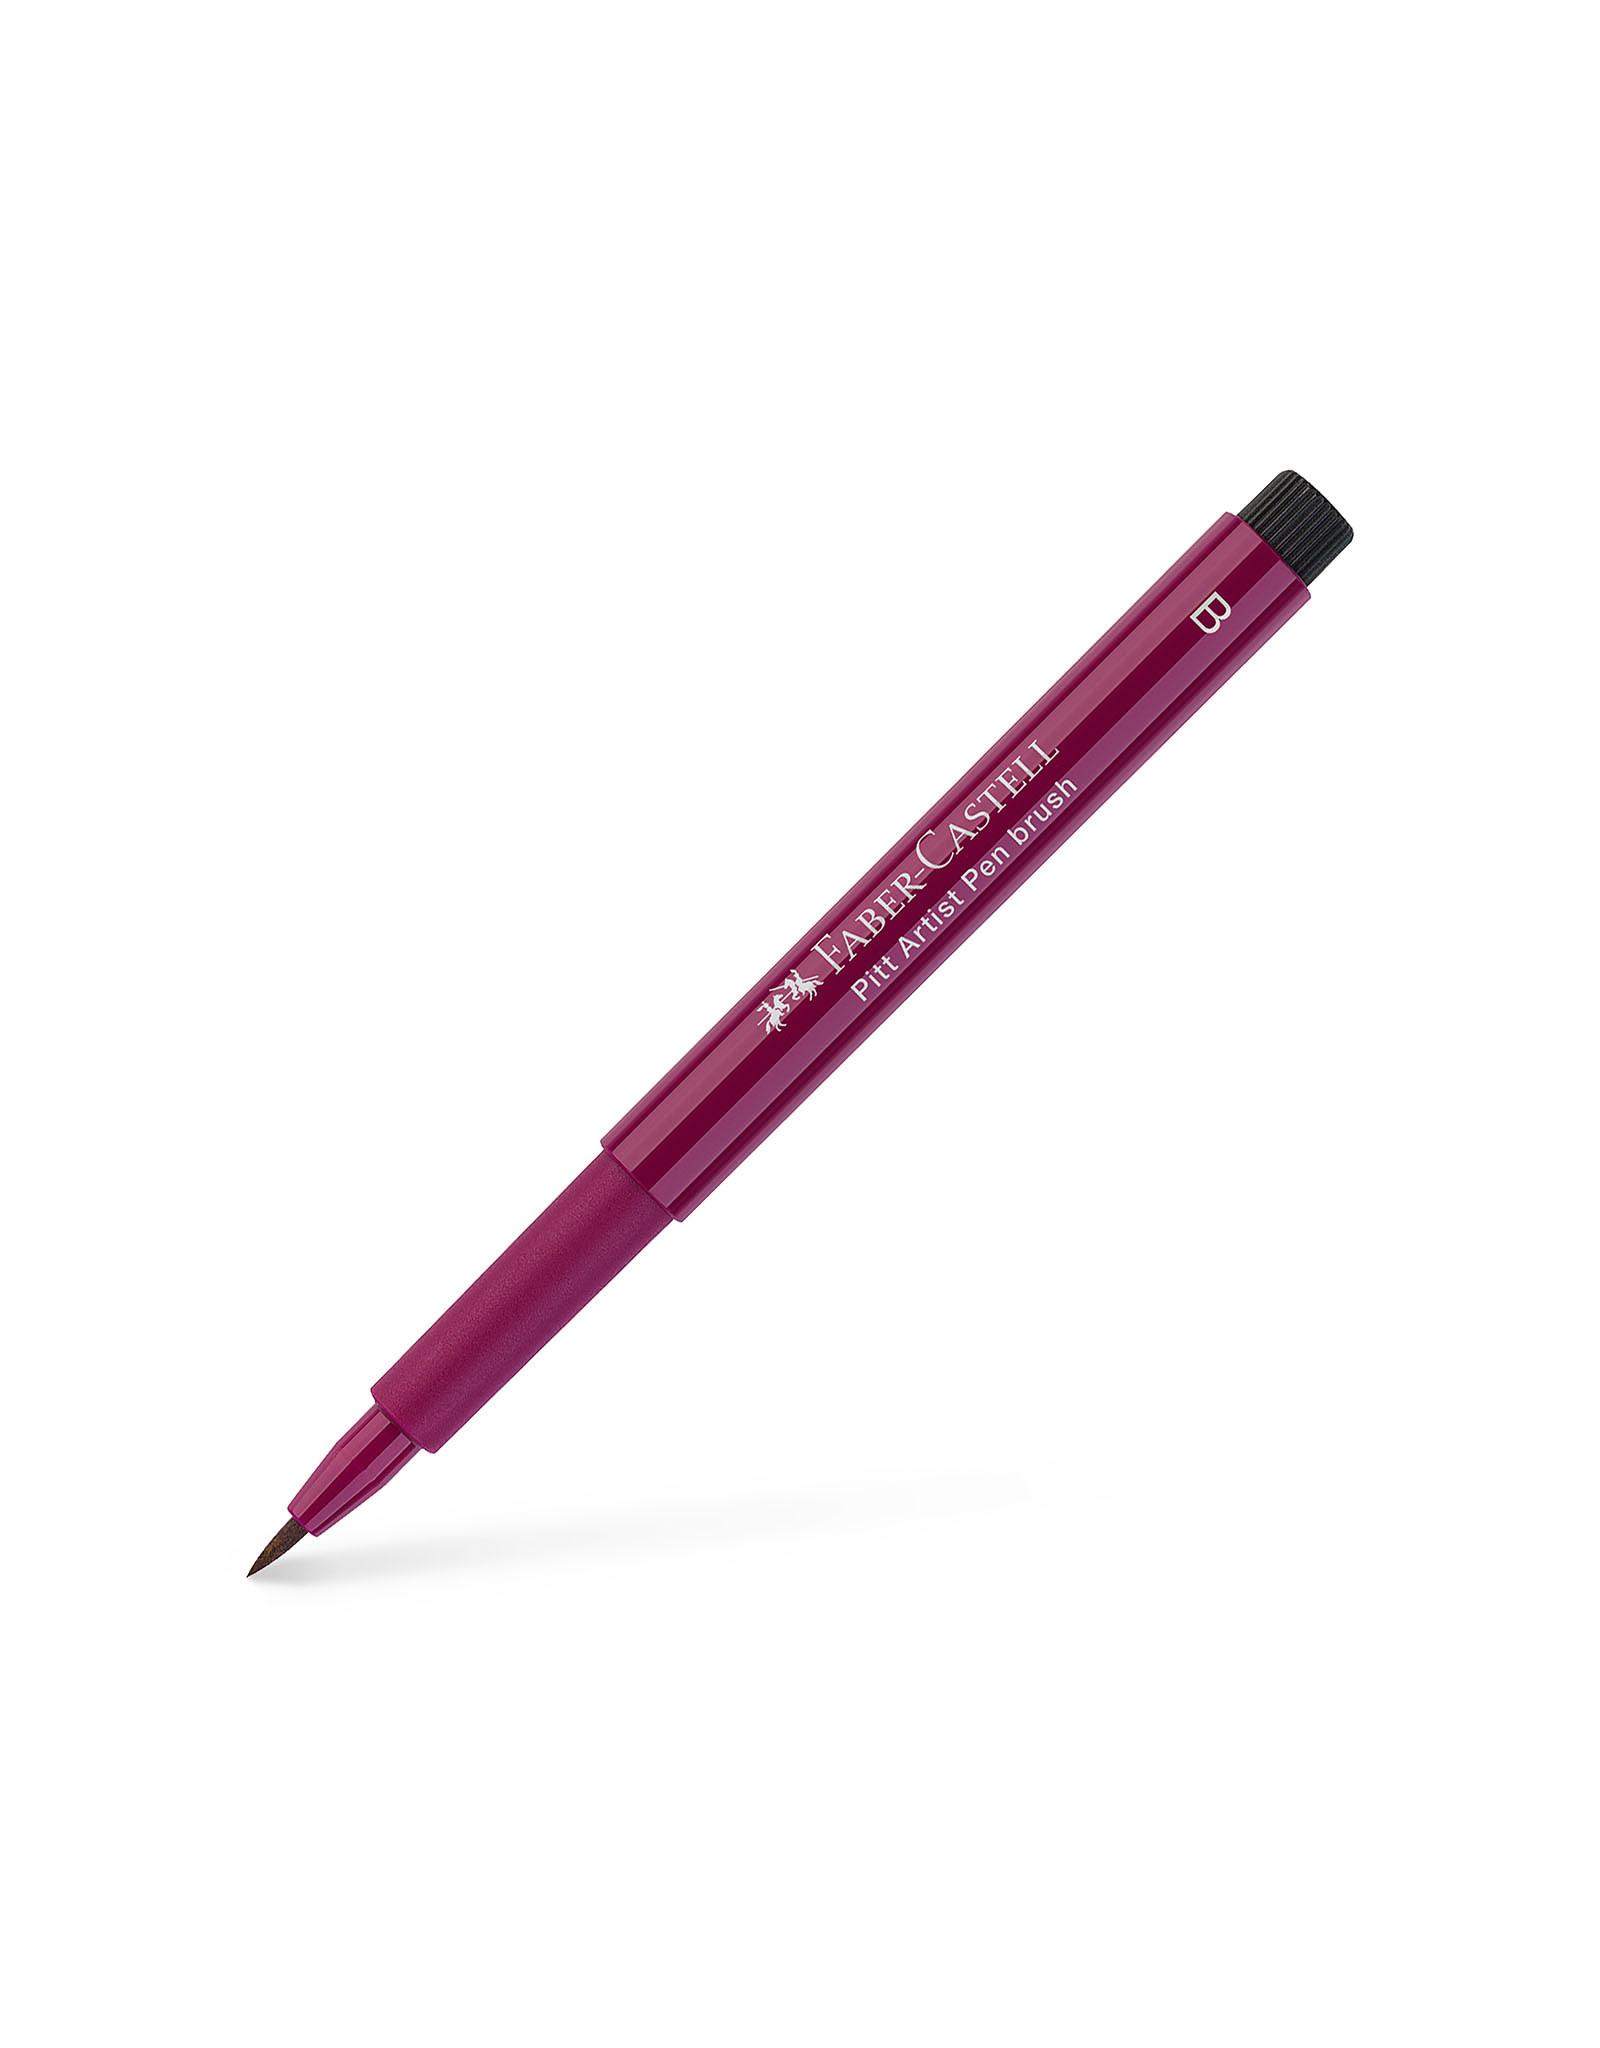 FABER-CASTELL Pitt Artist Pen, Brush, Magenta